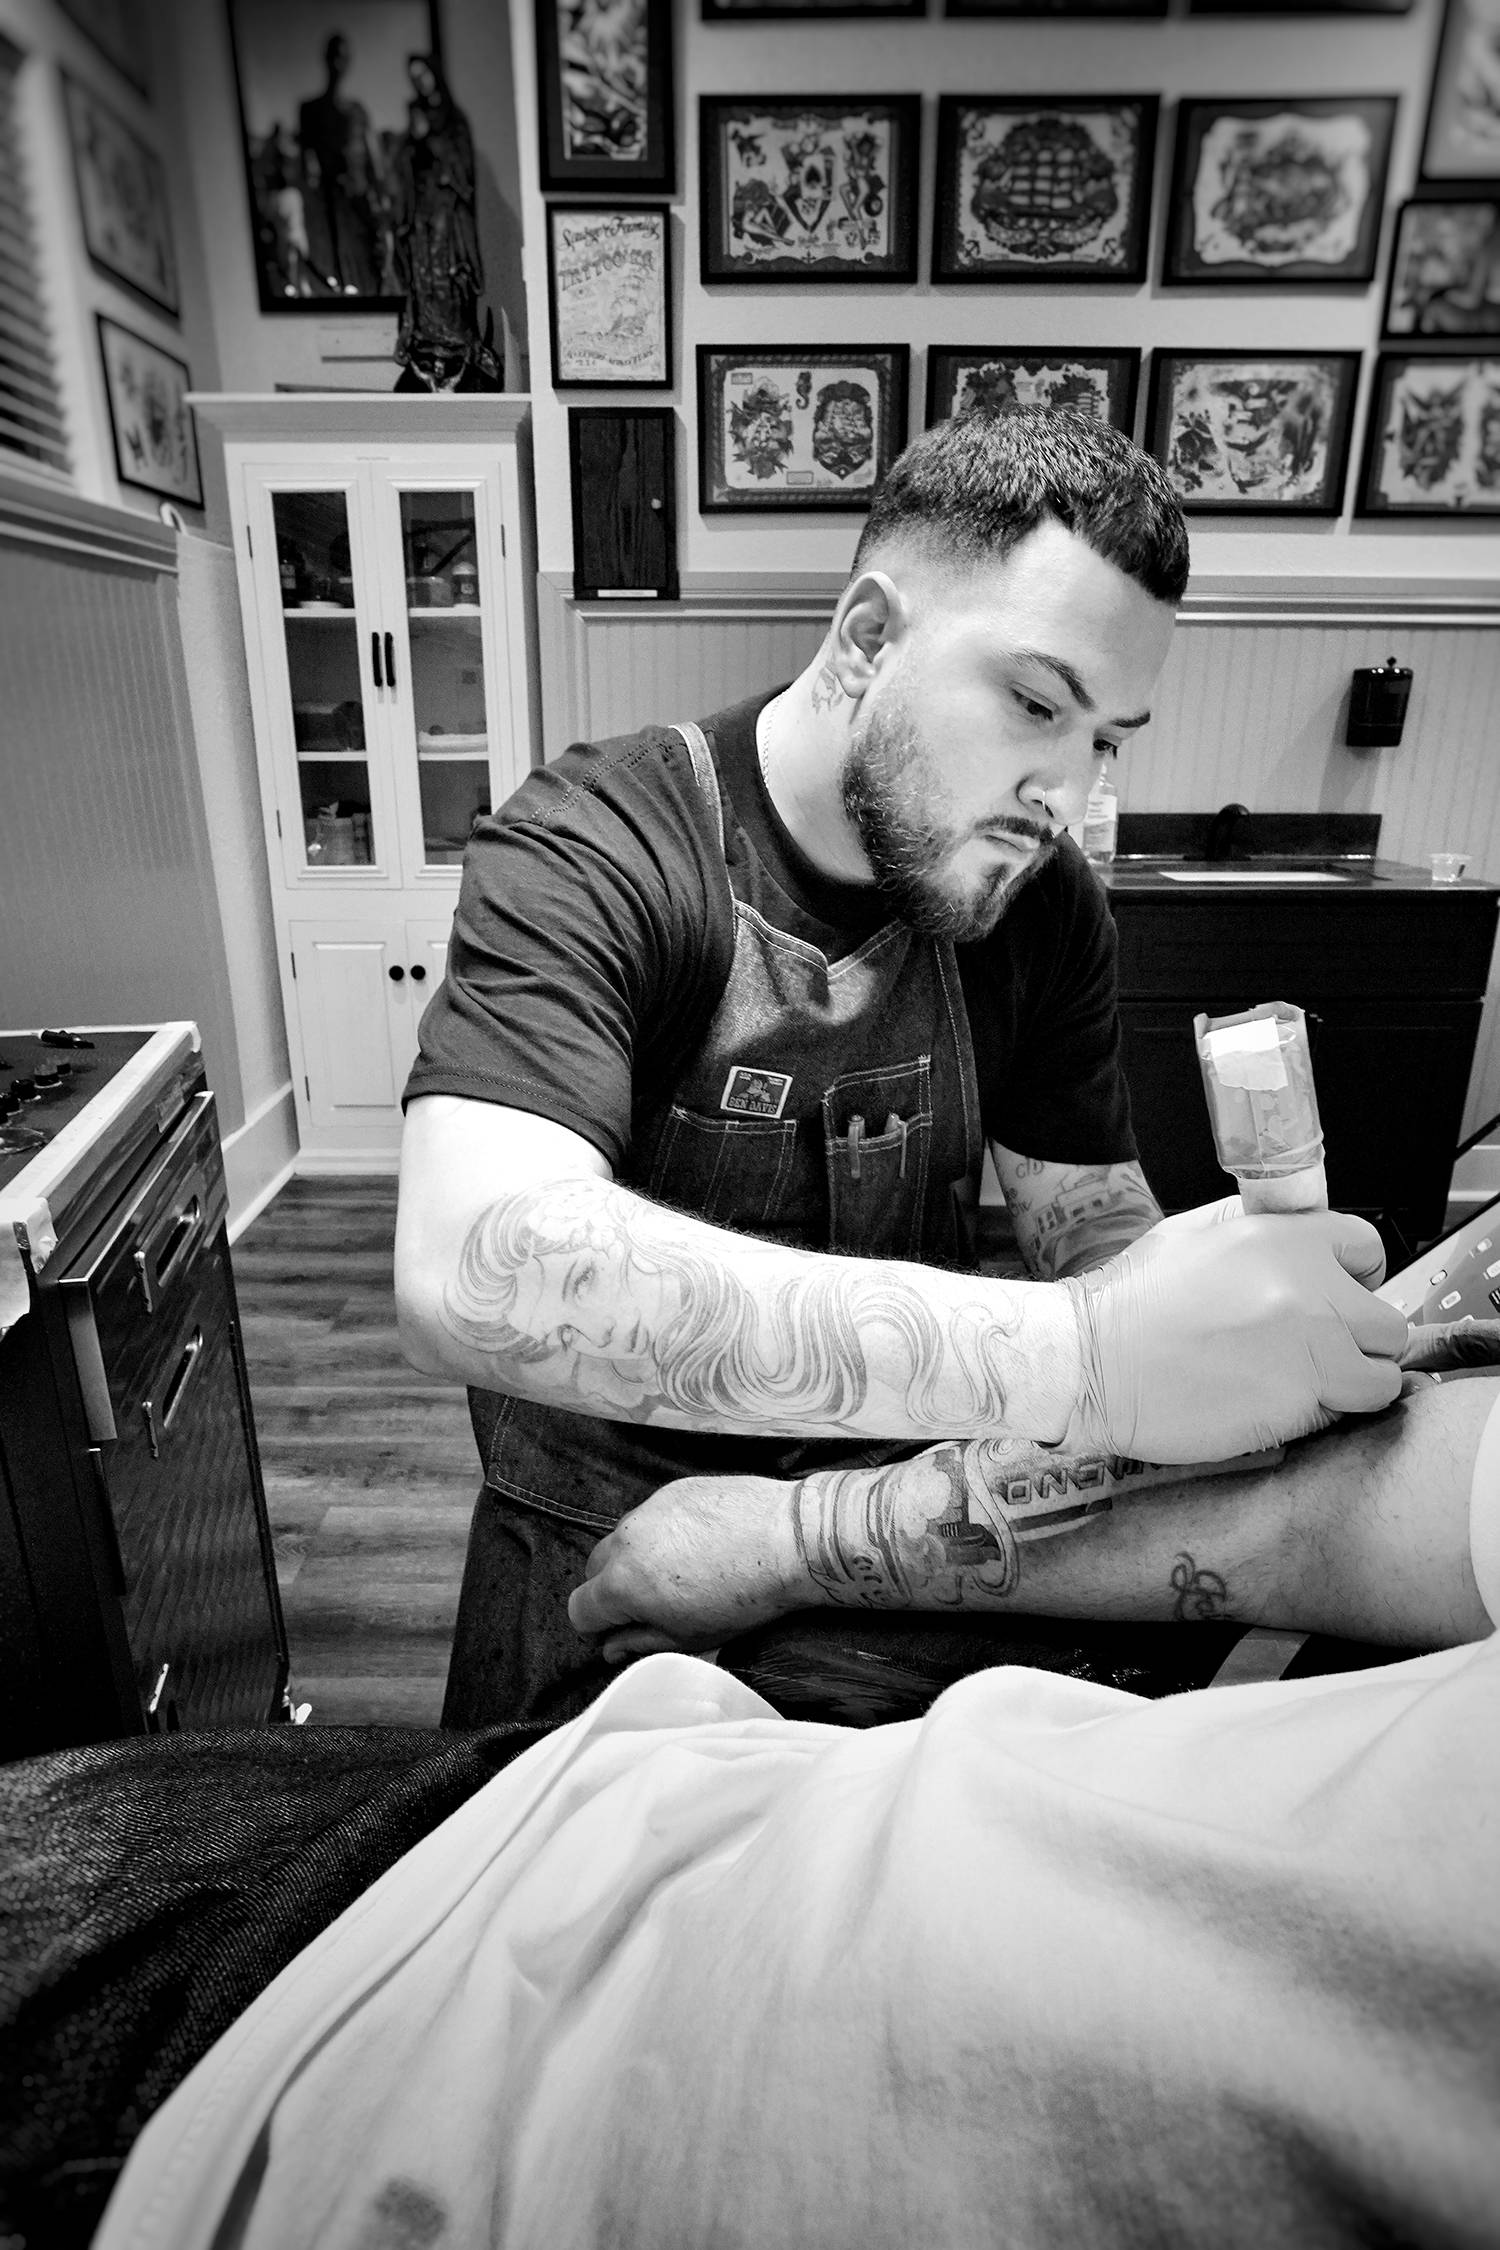 tattooed Eddy Reyes Jr at work